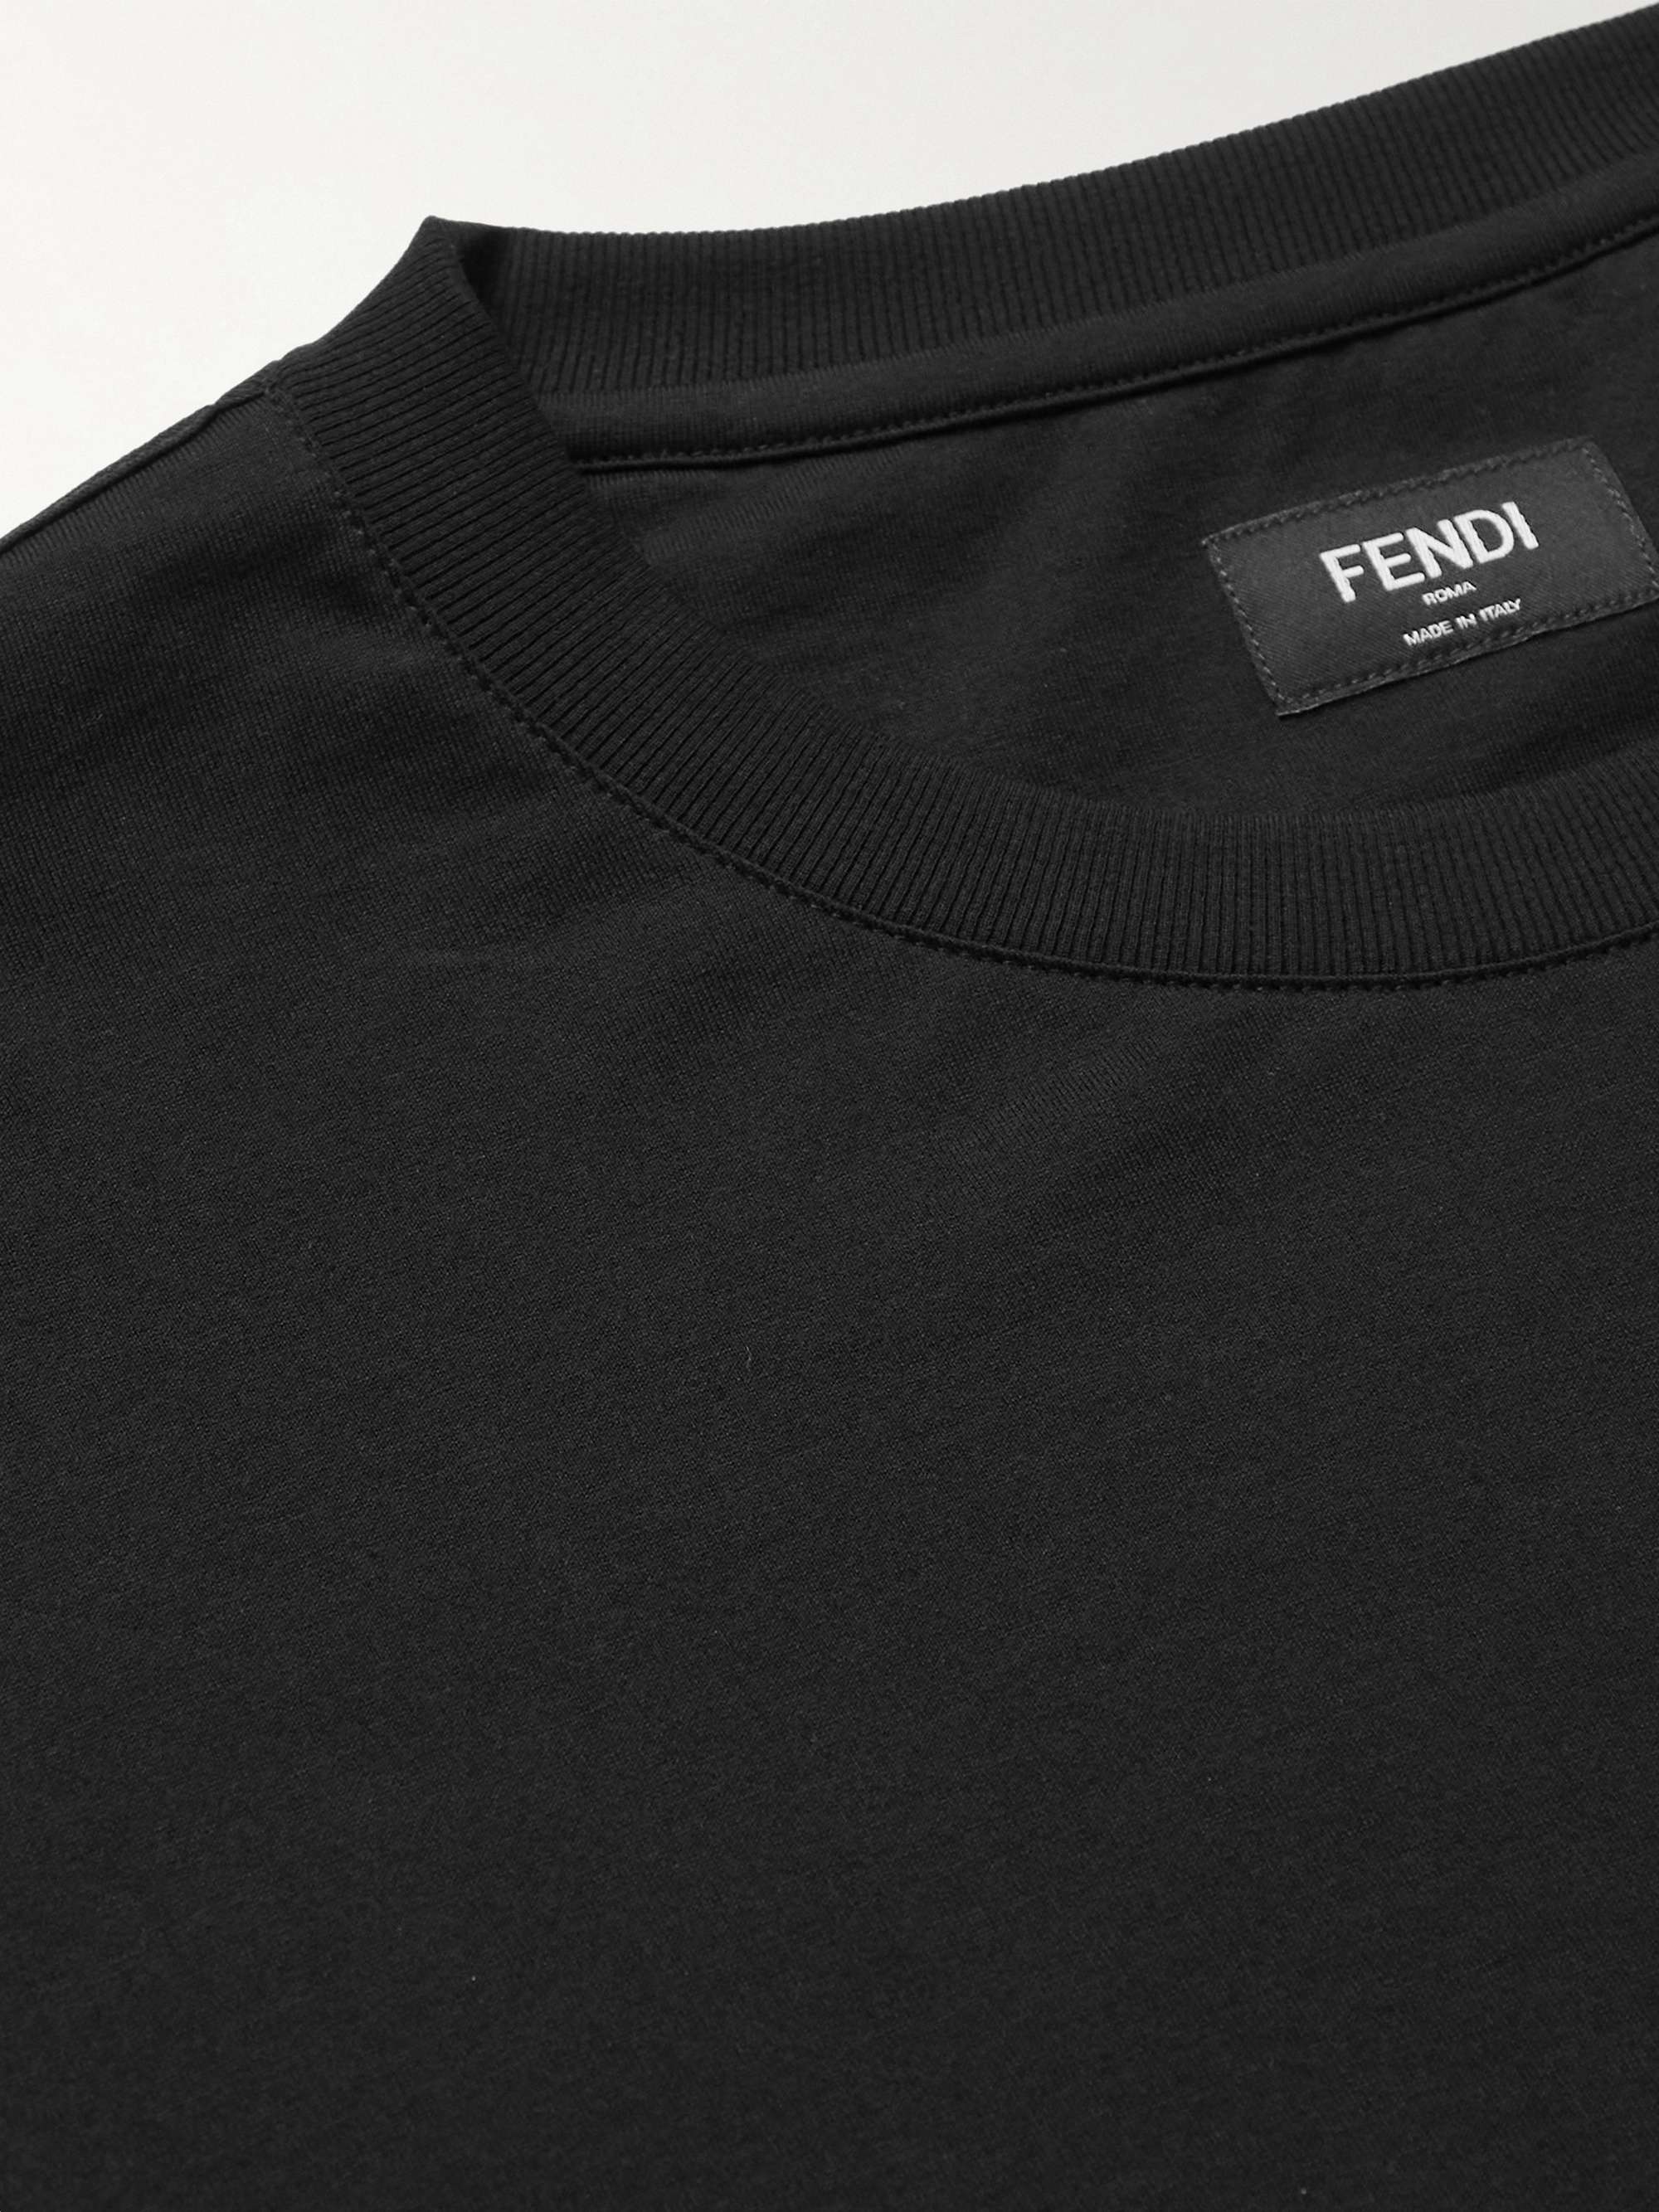 FENDI Logo-Embroidered Cotton-Jersey T-Shirt